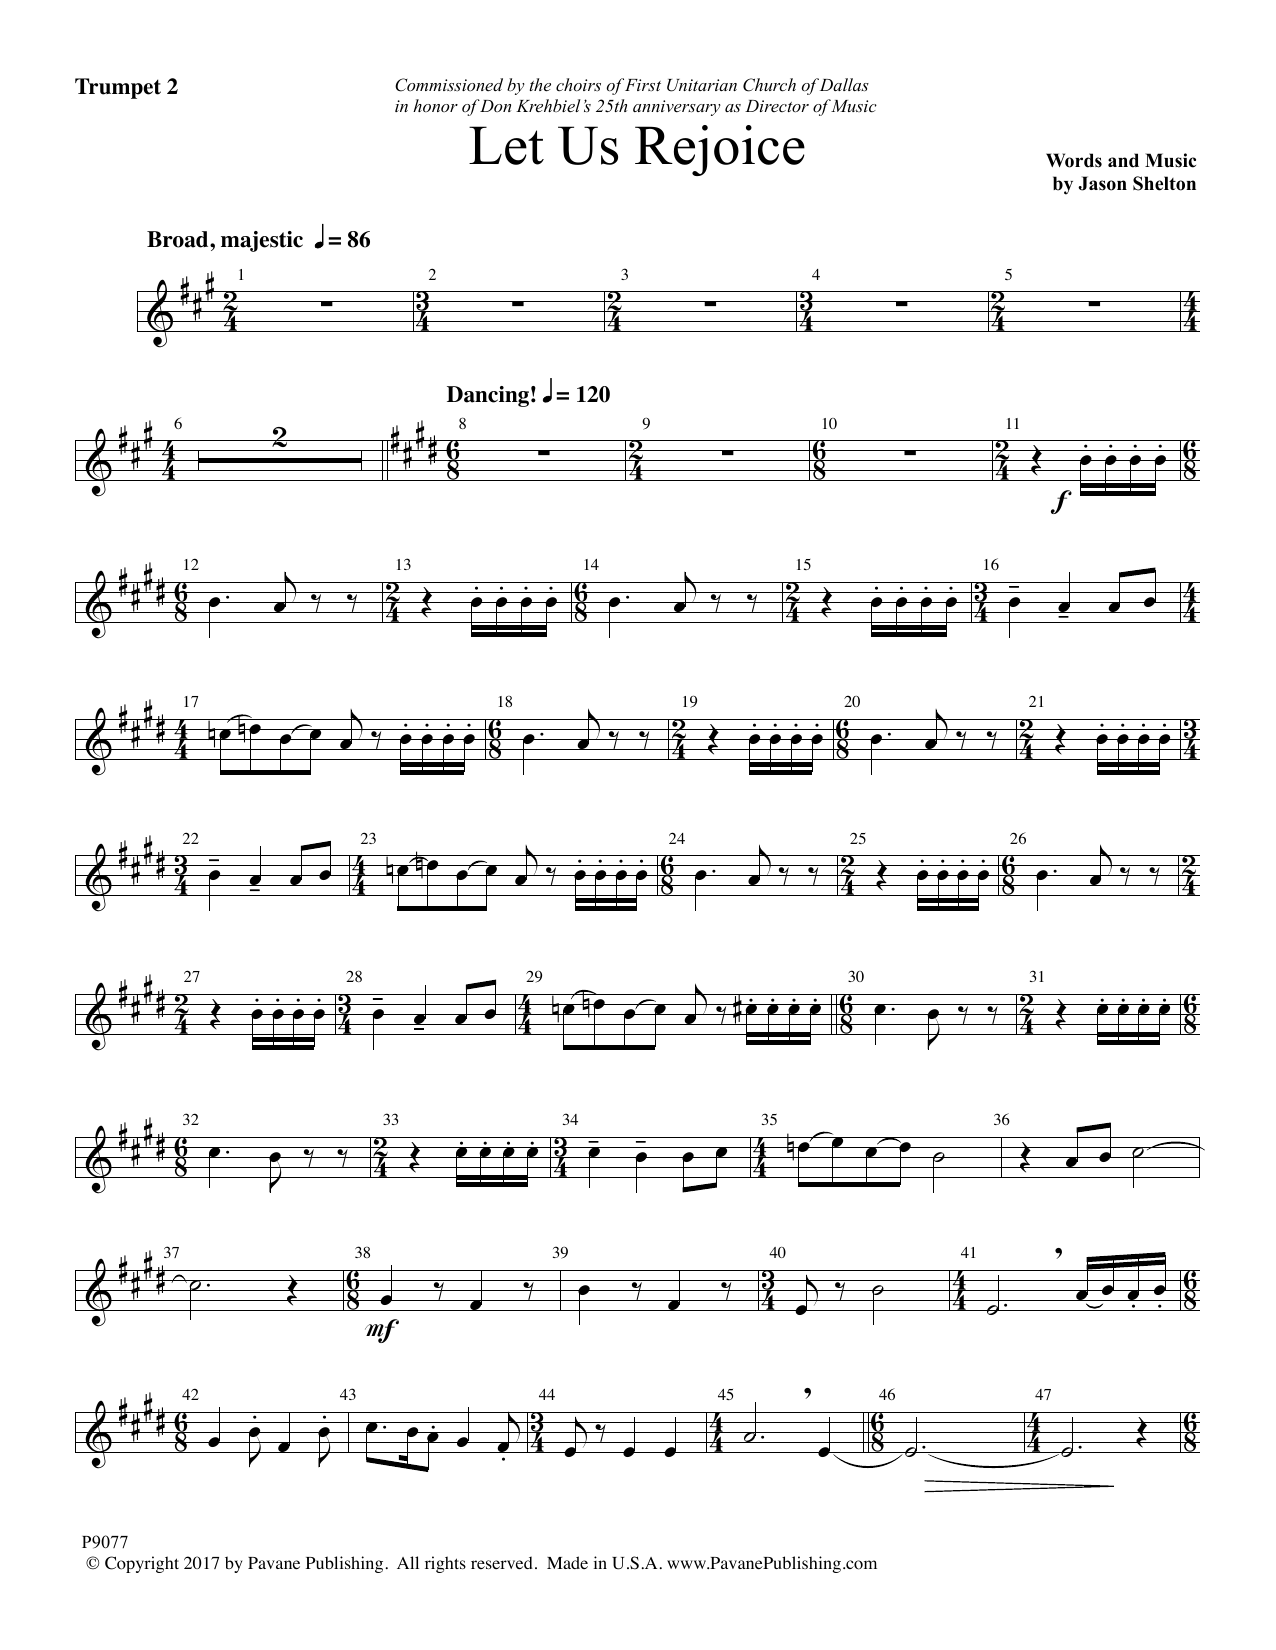 Download Jason Shelton To This Day - Trumpet 2 in Bb Sheet Music